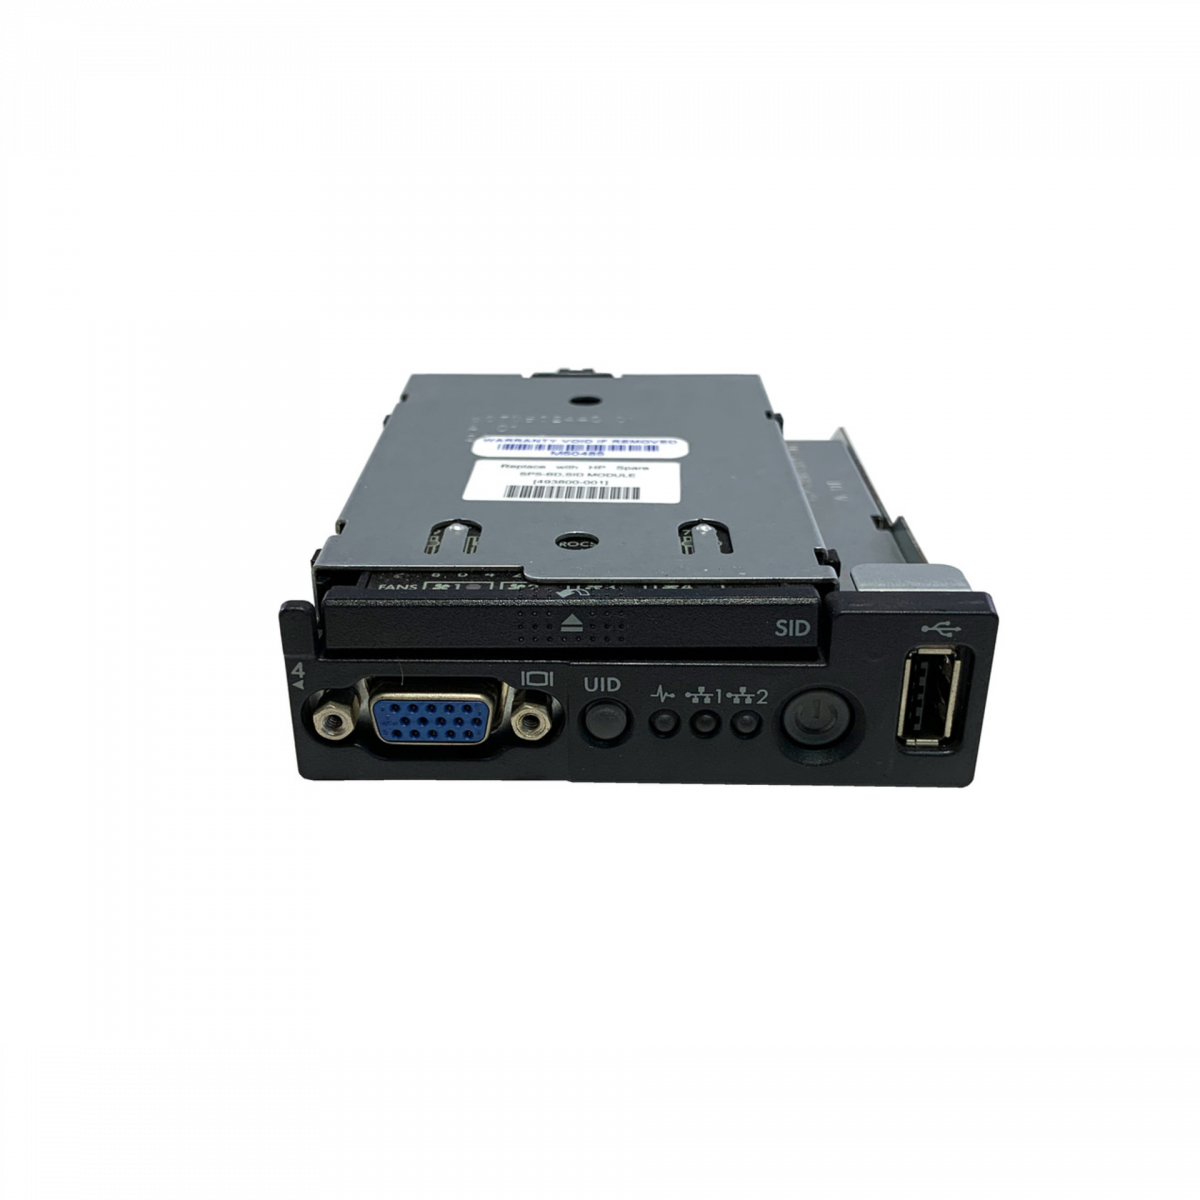 Модуль HP 493800-001 Proliant DL360 G6 Insight Display Module